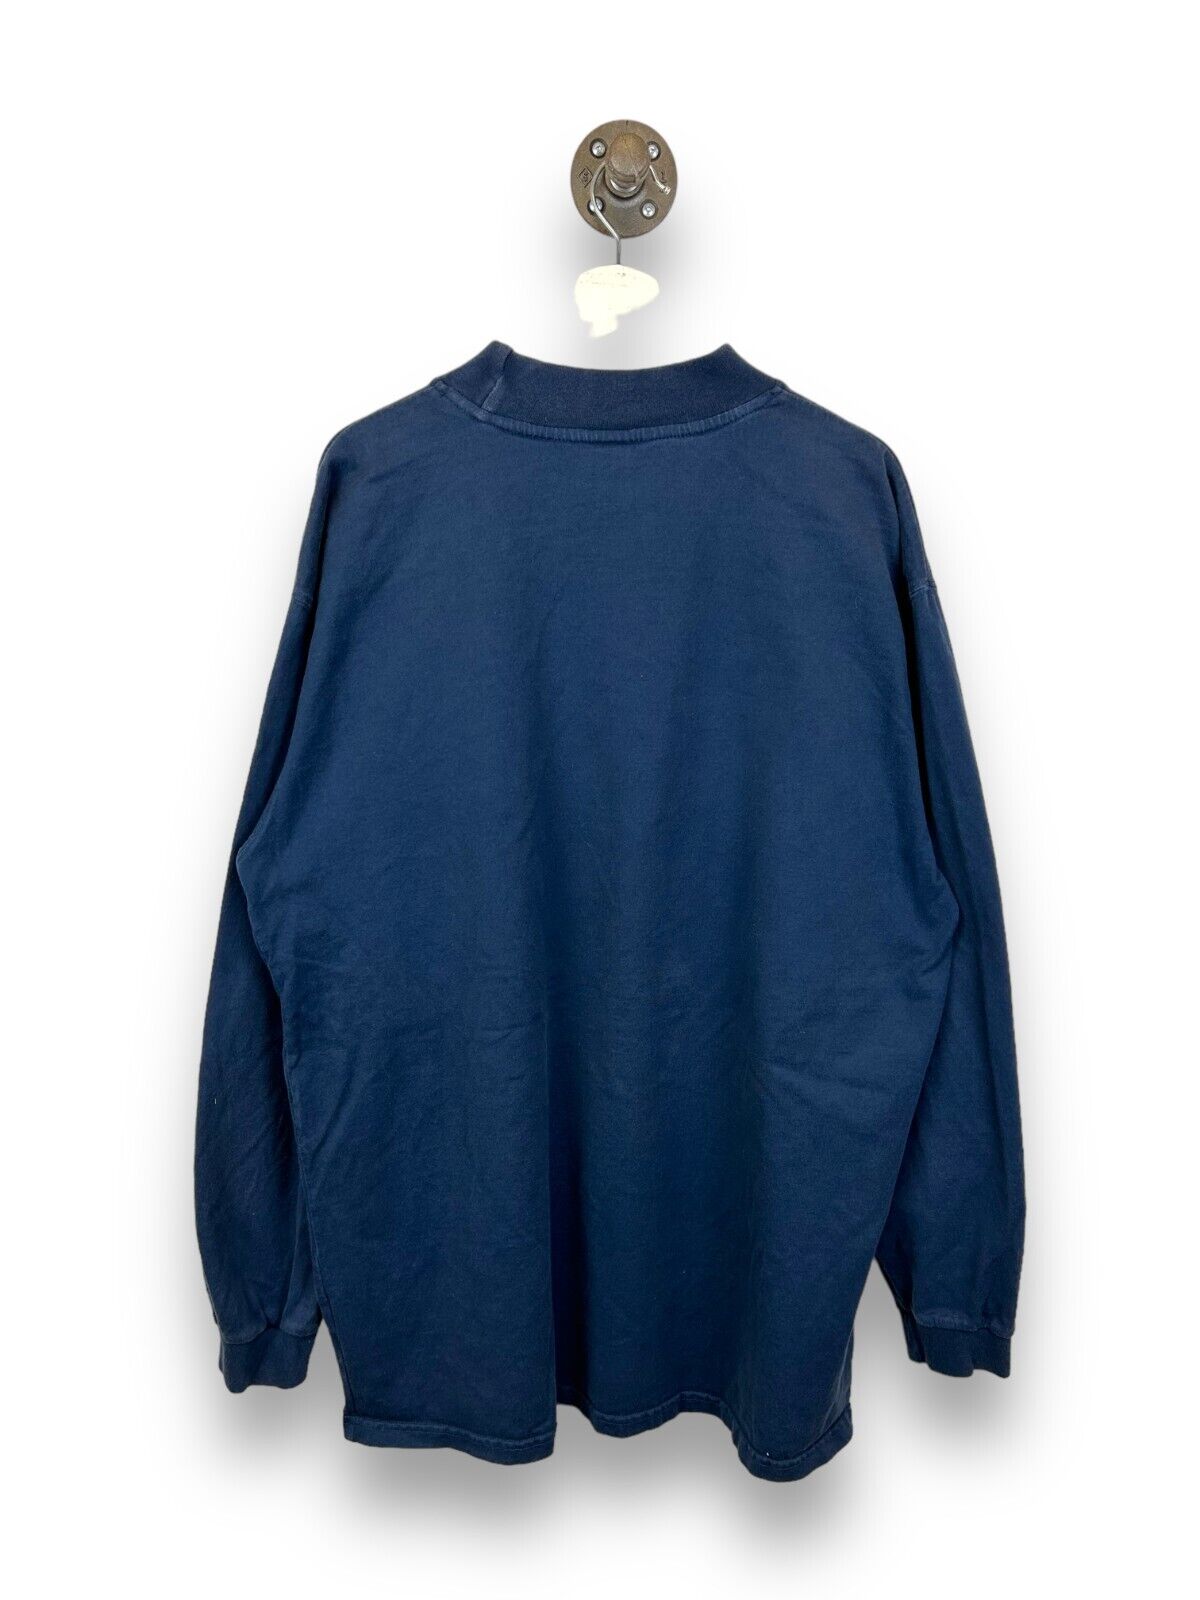 Vintage Nike Team Michigan Wolverines NCAA Mockneck Long Sleeve T-Shirt Size 2XL